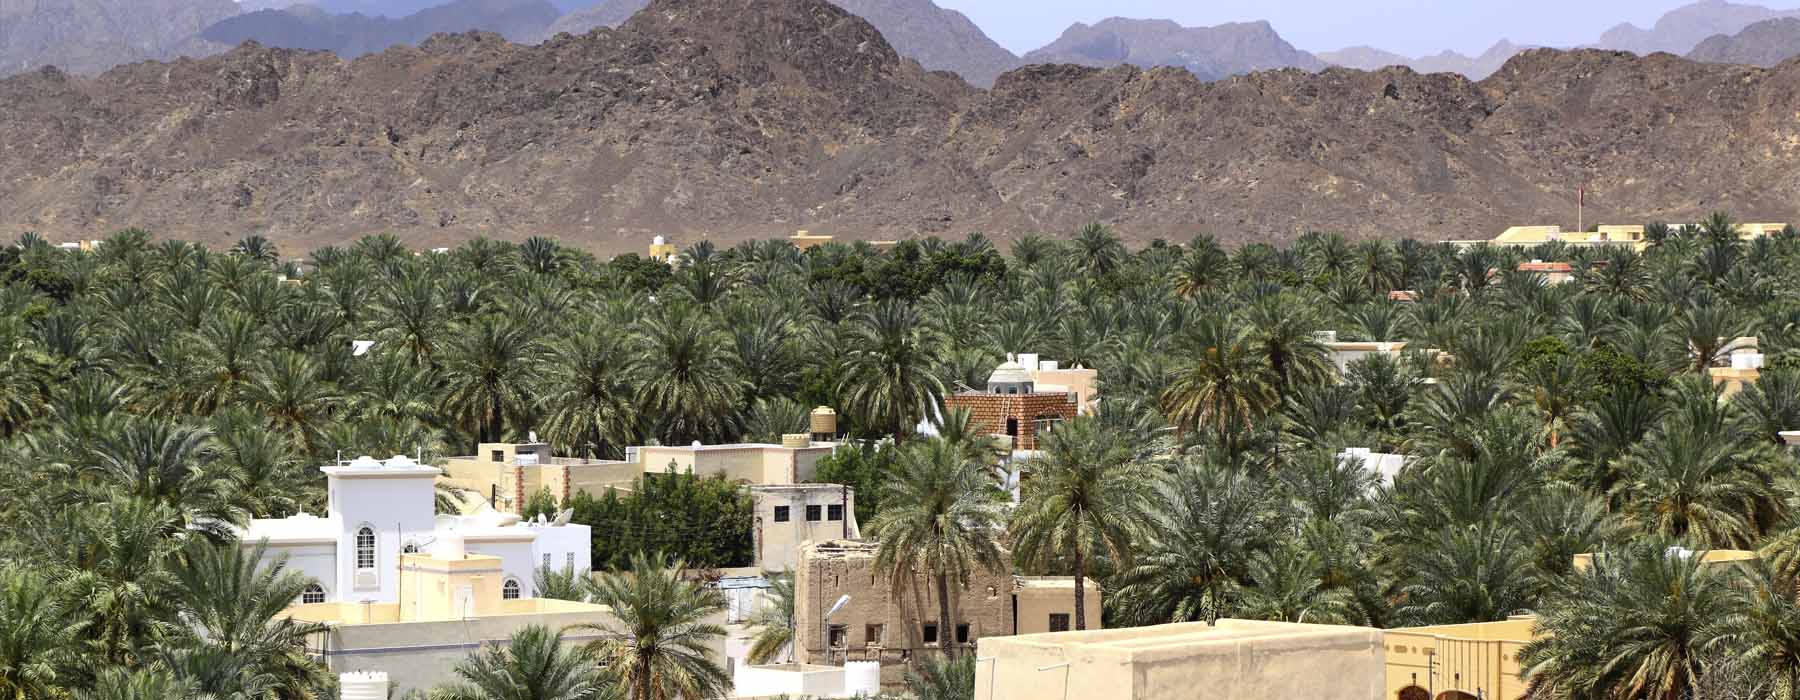 All our Oman<br class="hidden-md hidden-lg" /> Luxury Holidays